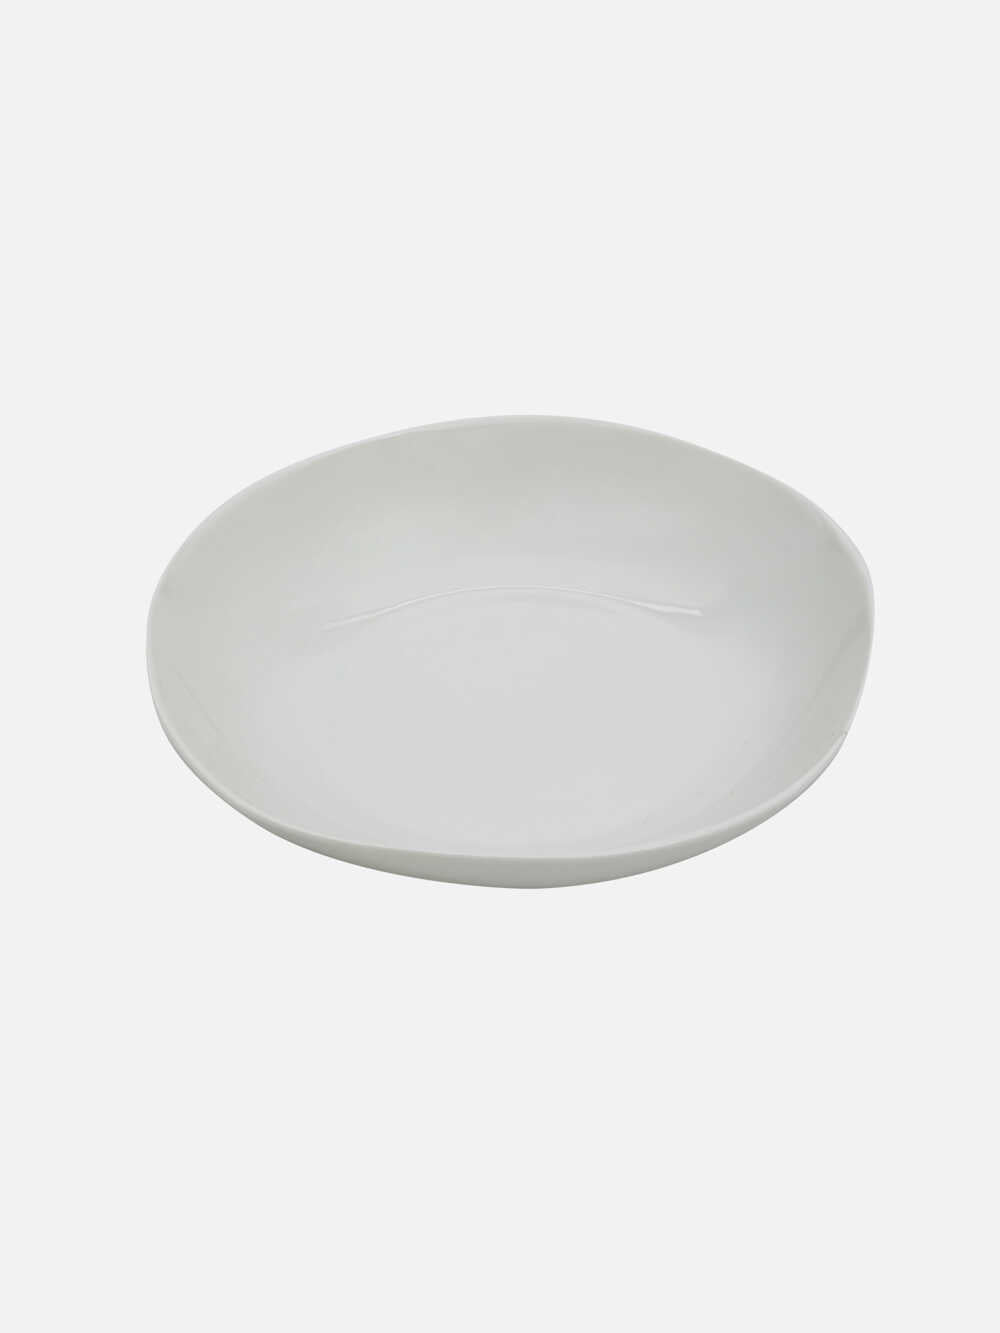 Elegant serving bowl